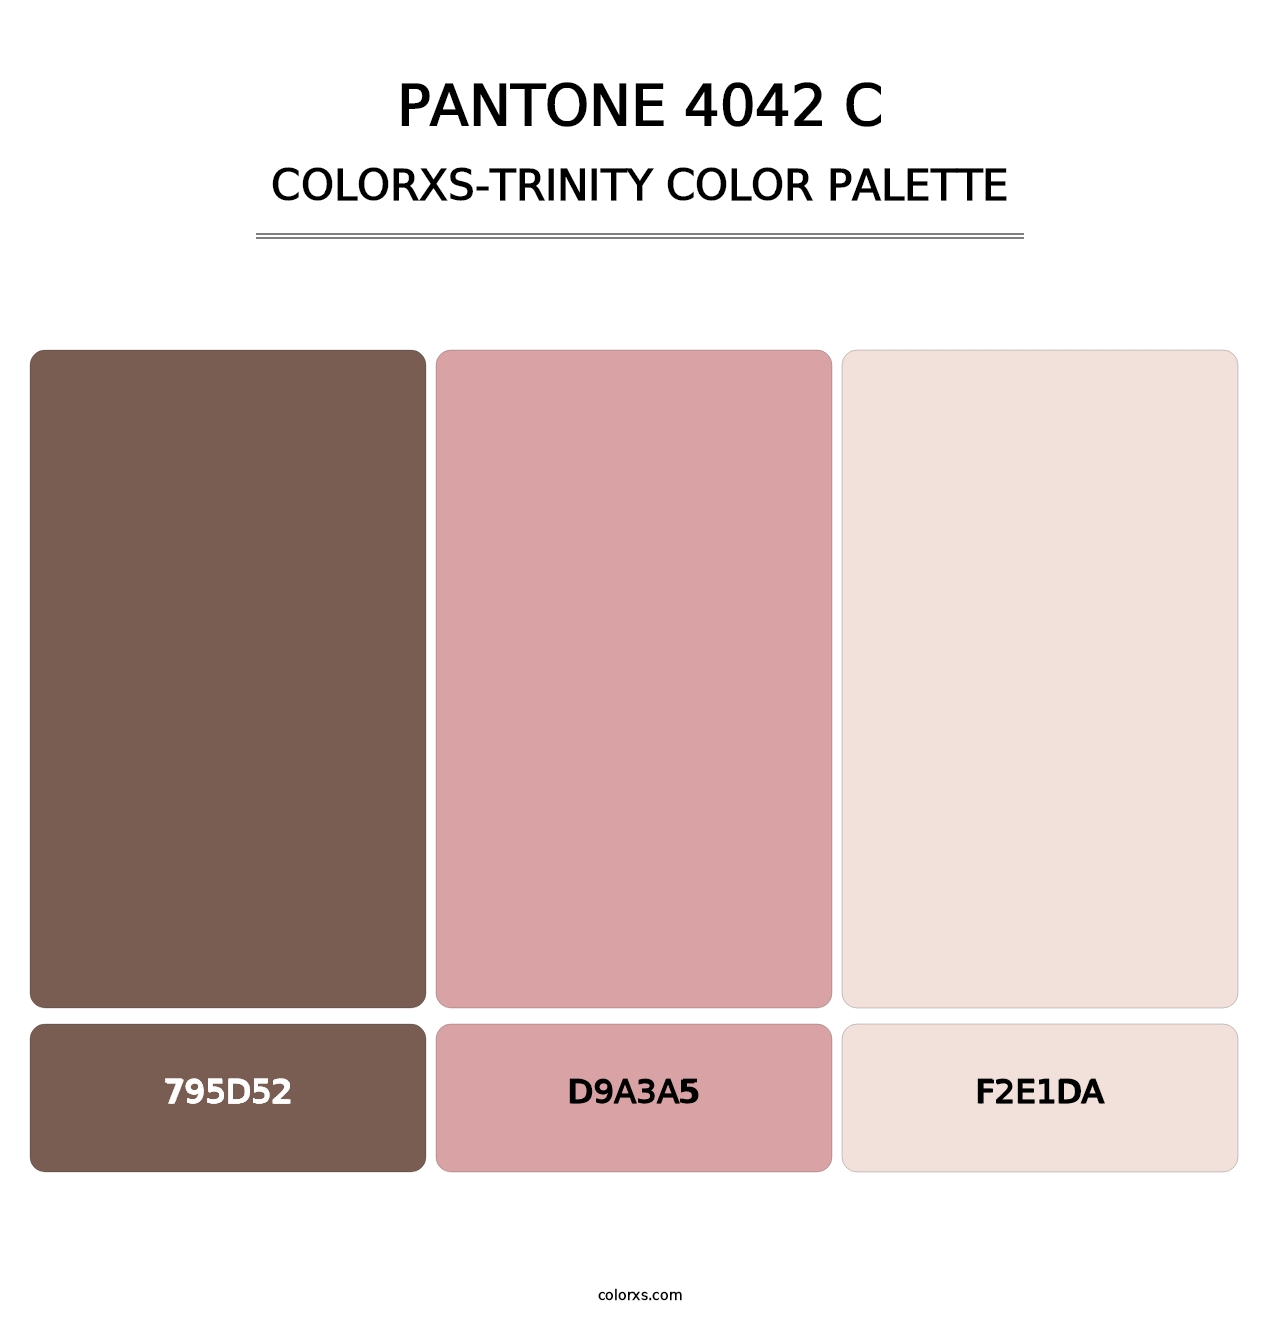 PANTONE 4042 C - Colorxs Trinity Palette